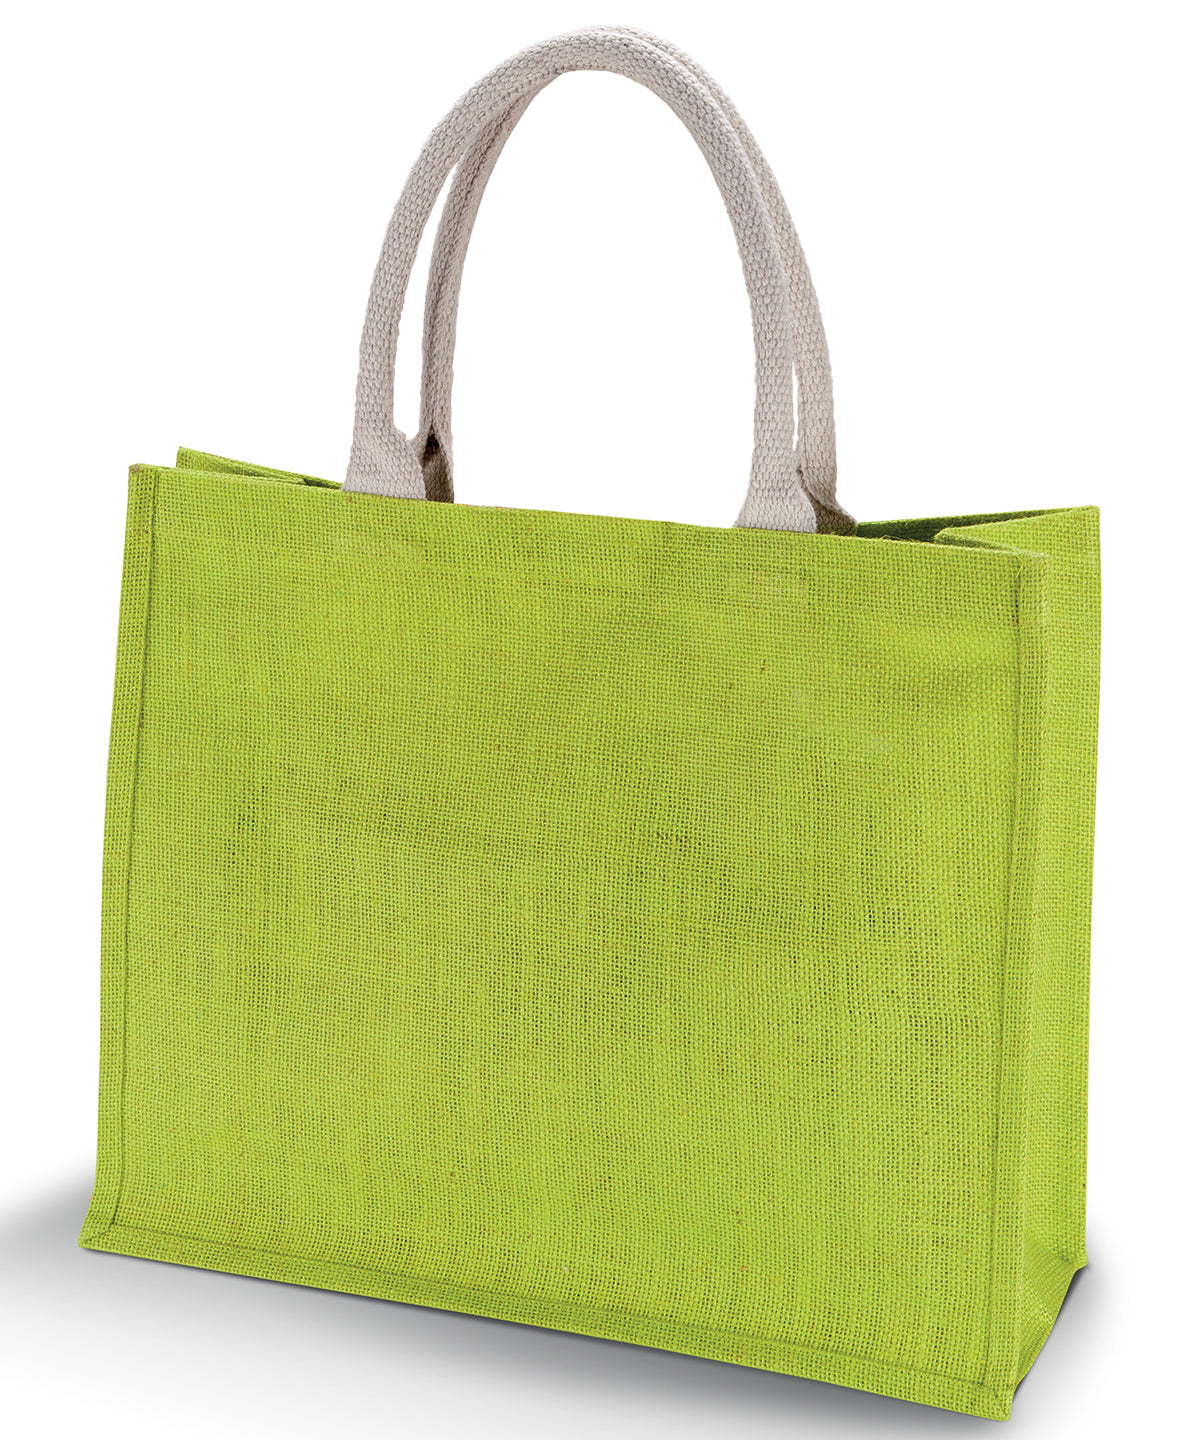 Personalised Bags - Lime KiMood Jute beach bag